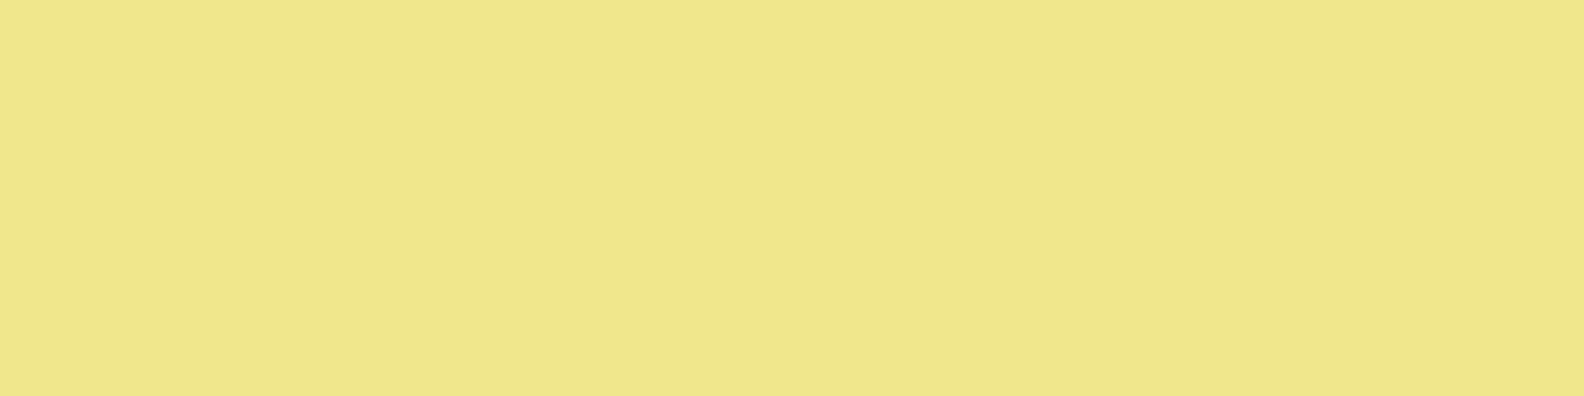 1584x396 Light Khaki Solid Color Background